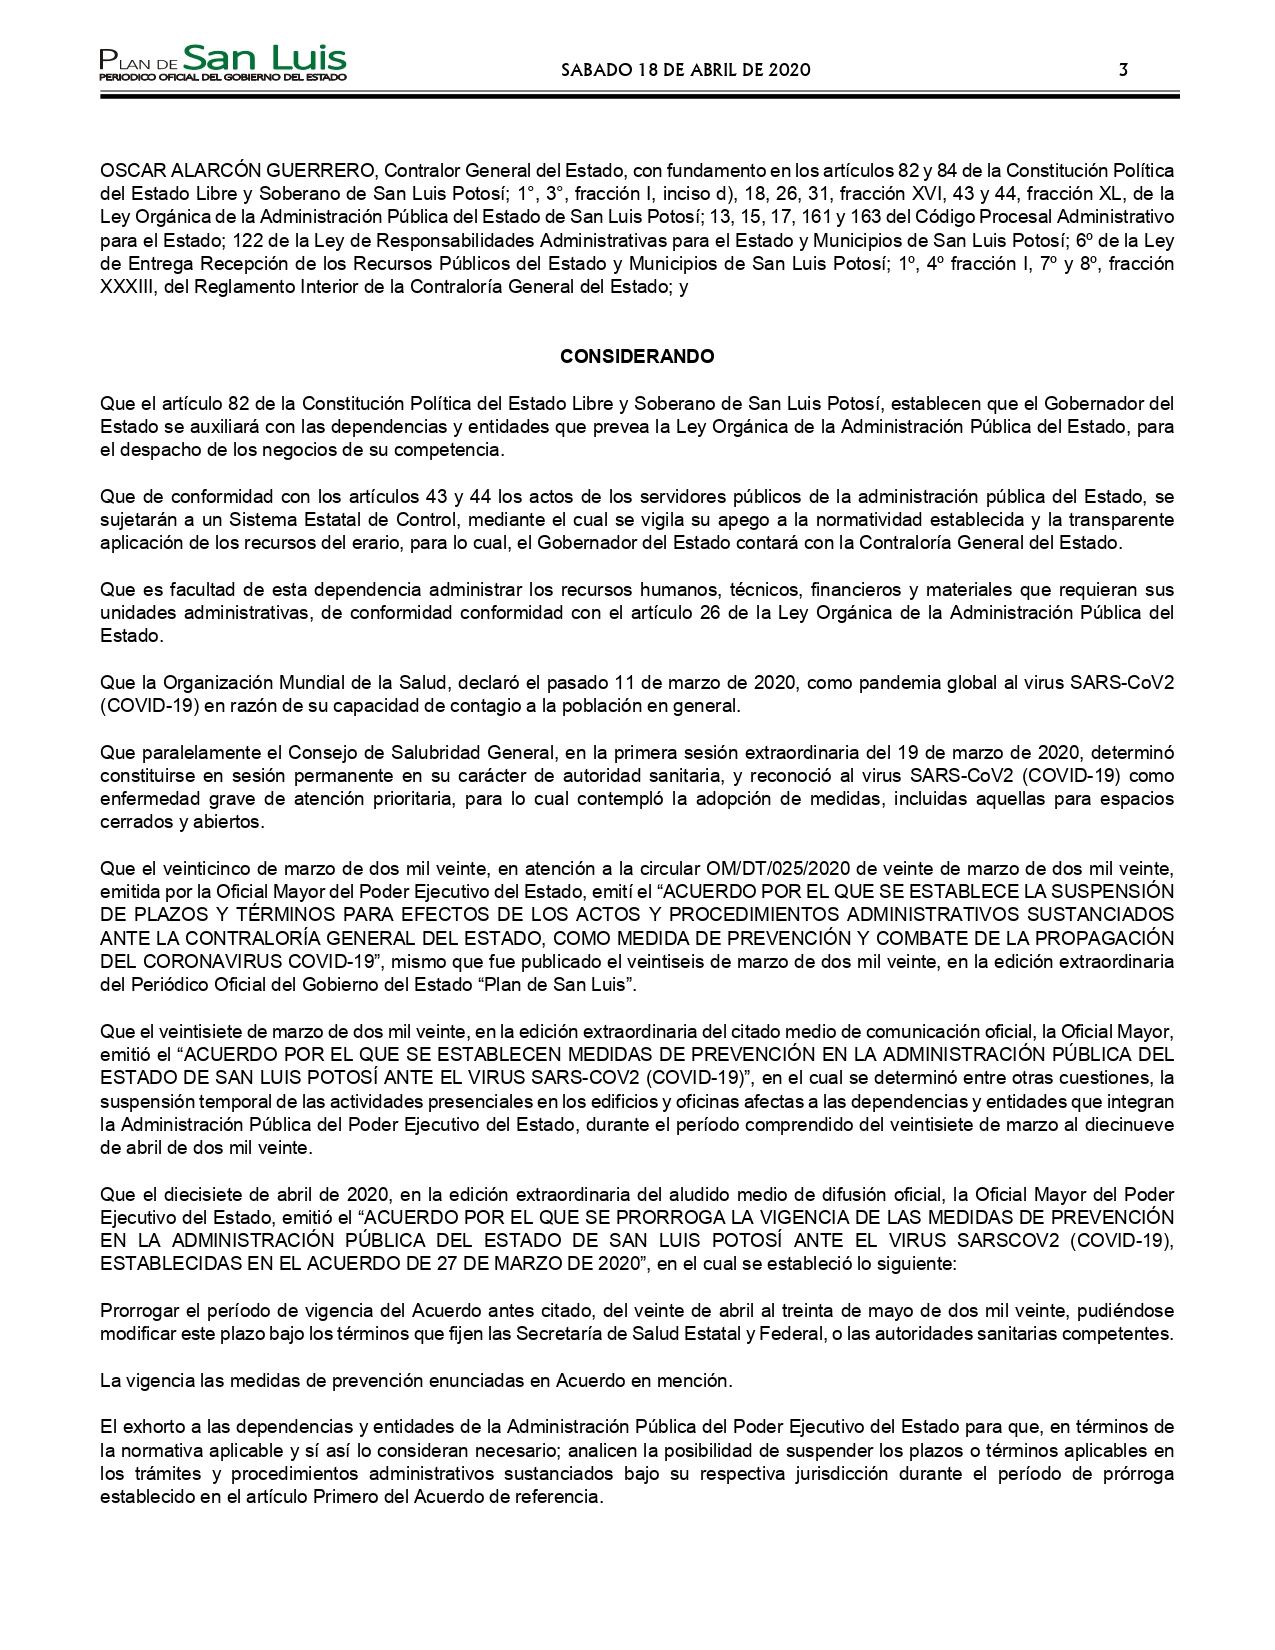 SLP ACUERDO DE PROROGA SUSPENSION DEBIDO AL COVID 19 CONTRALORIA GRAL. DEL EDO (18-ABR-2020).pdf (1)_pages-to-jpg-0003.jpg